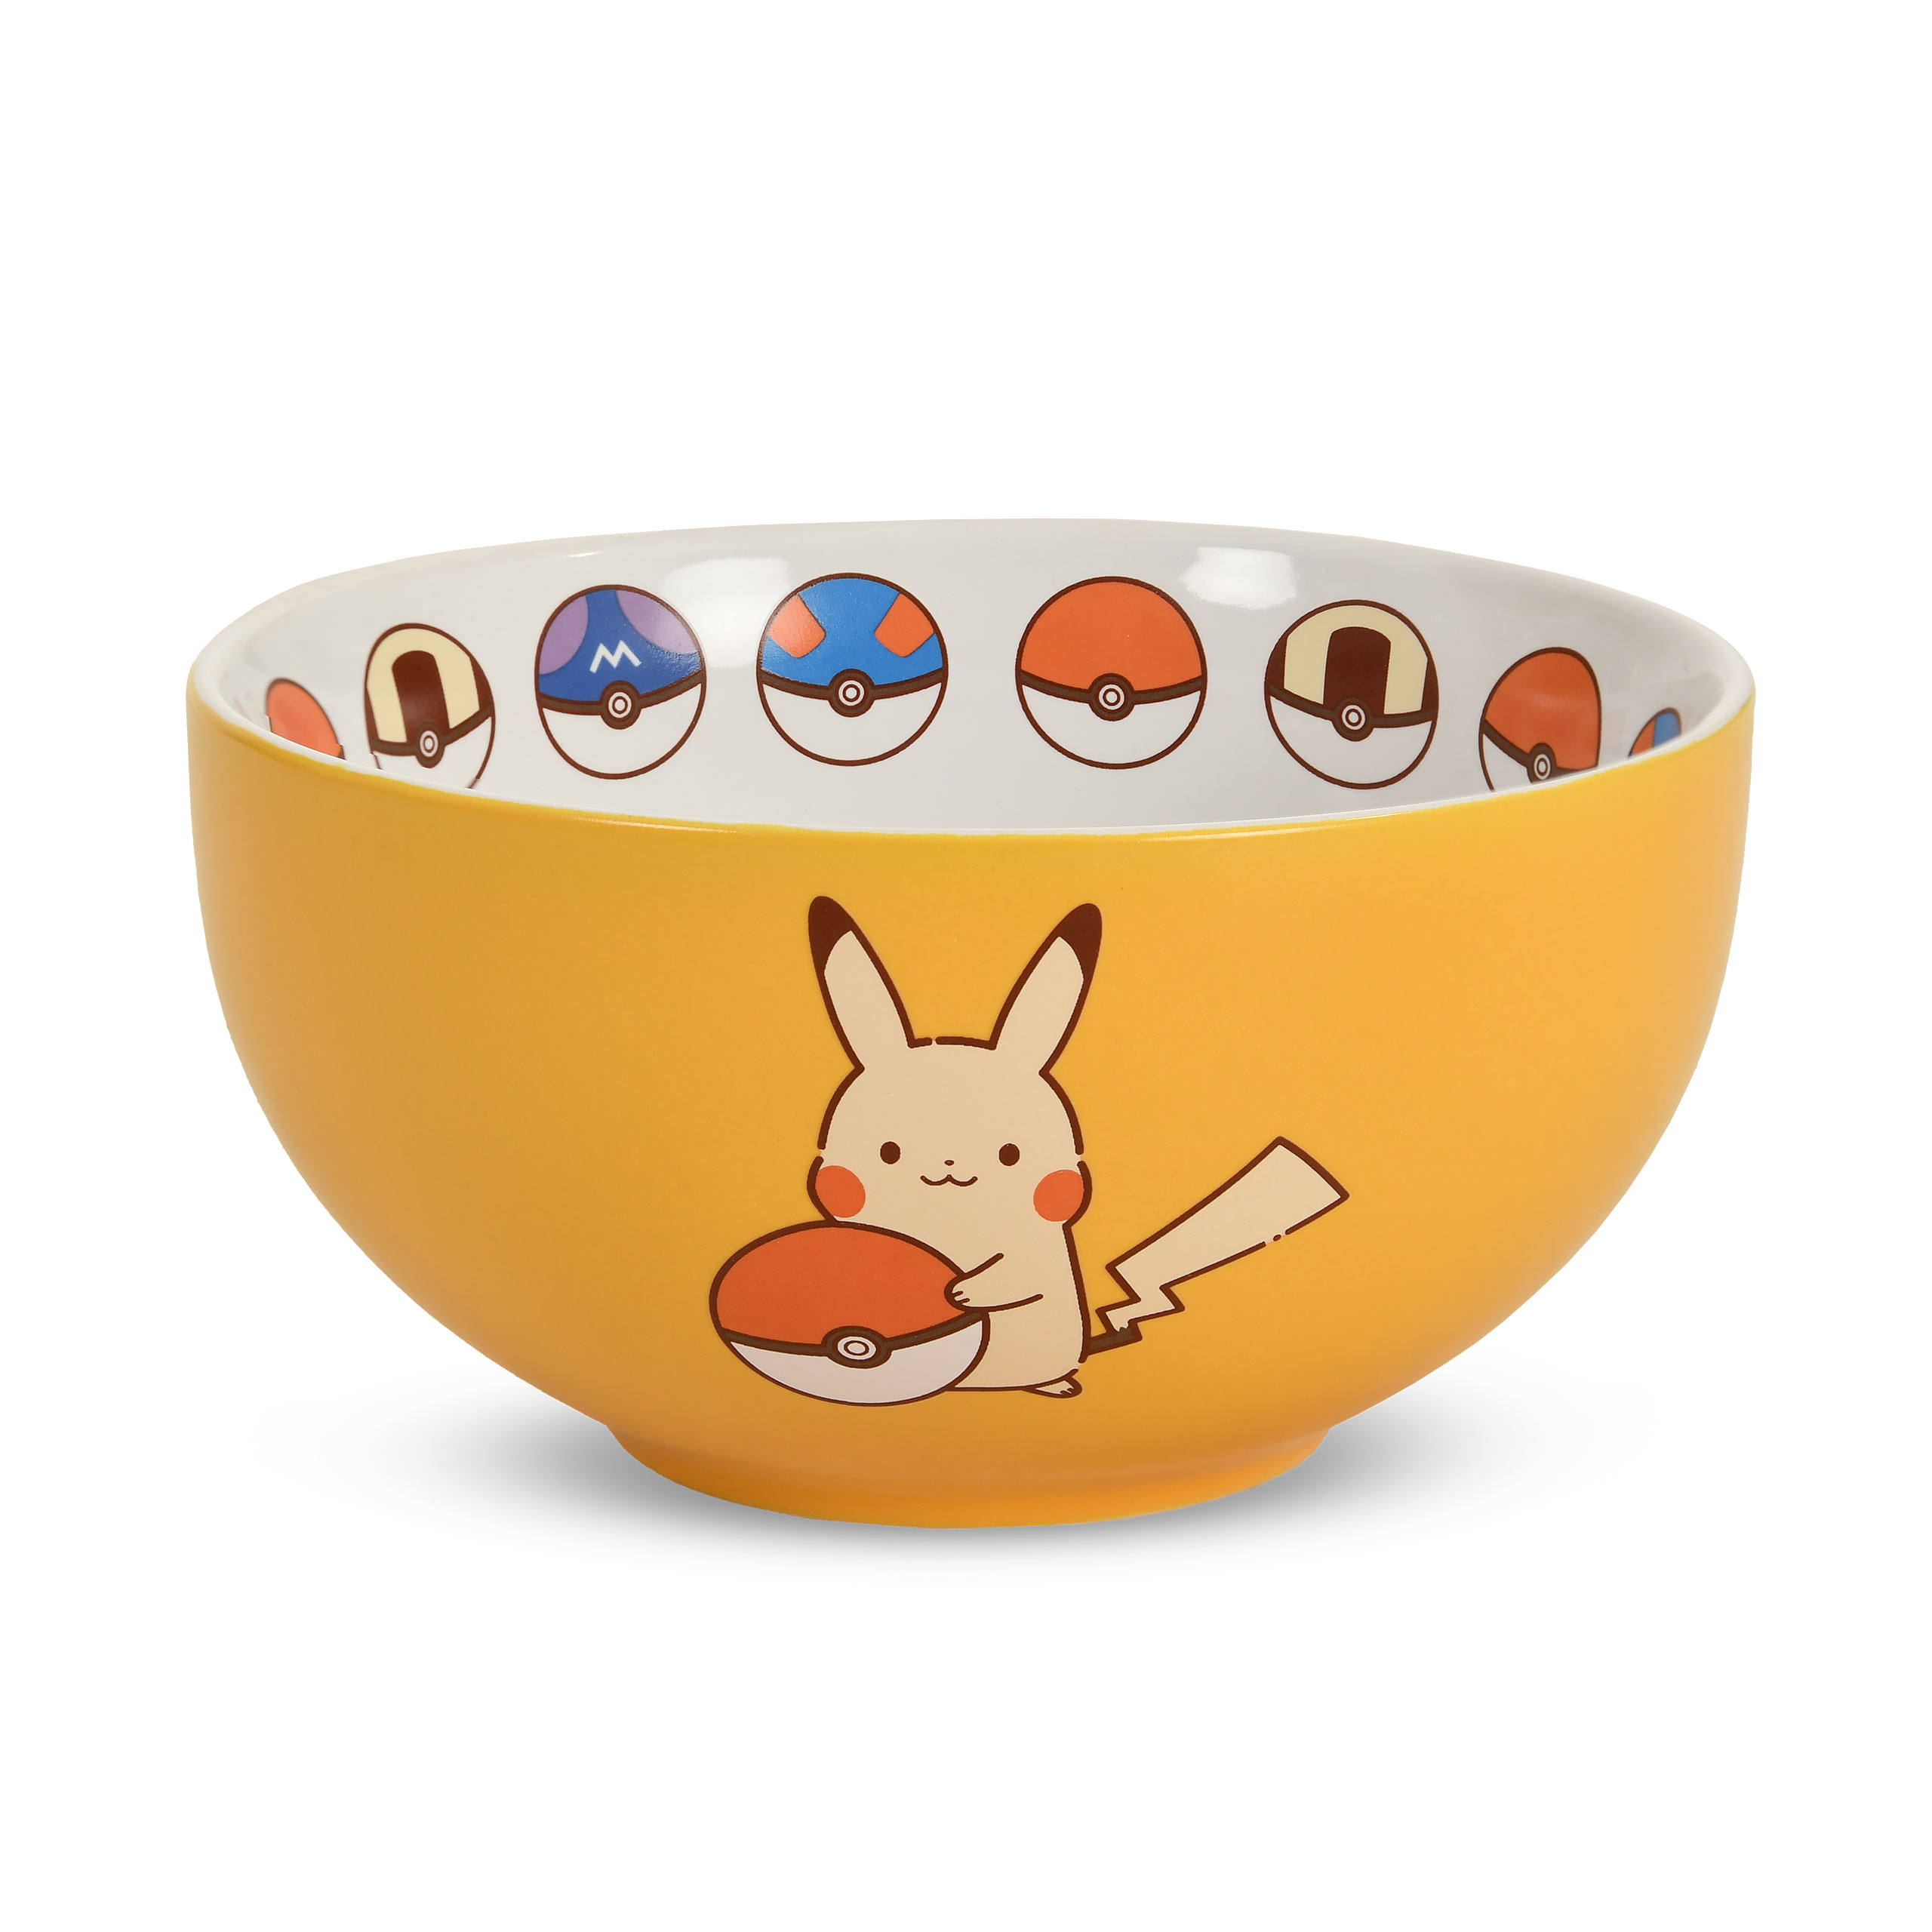 Pokemon - Pikachu Electric Type Cereal Bowl